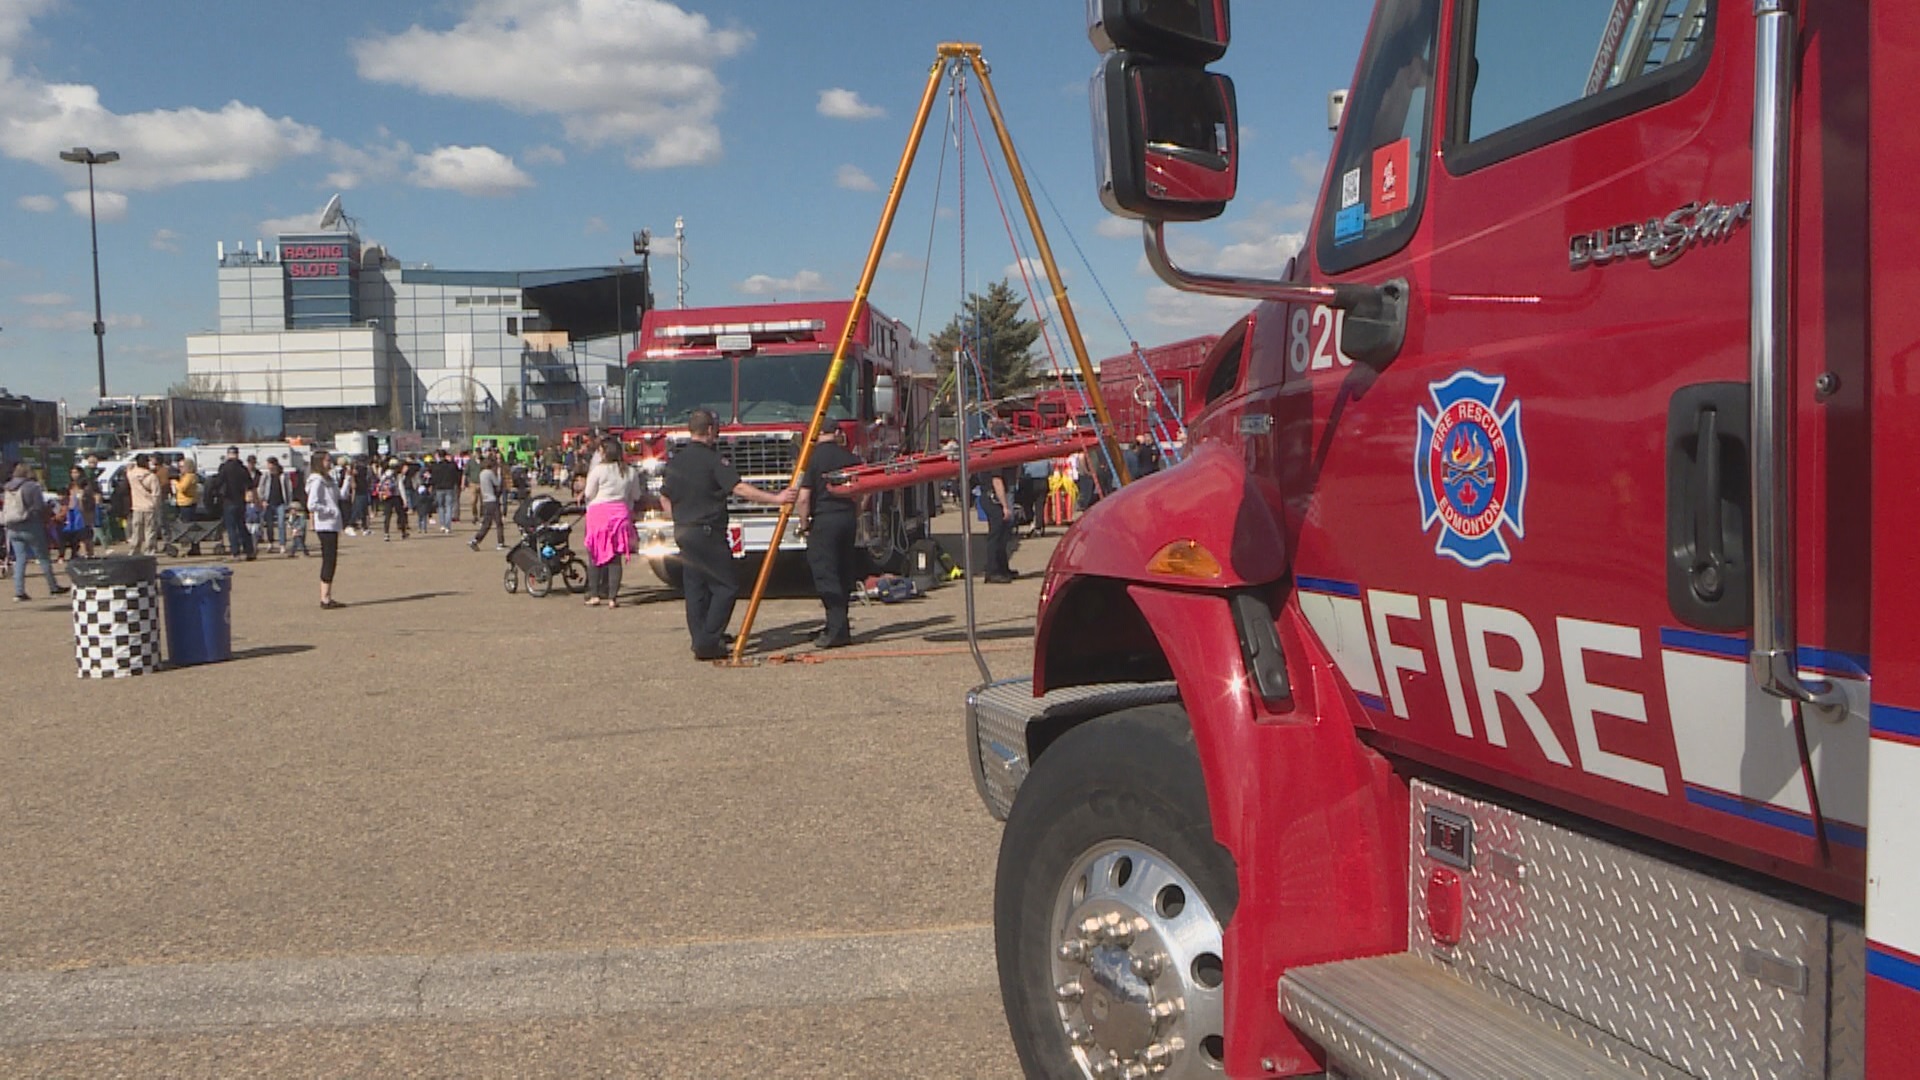 Edmonton event highlights efforts to improve emergency responses